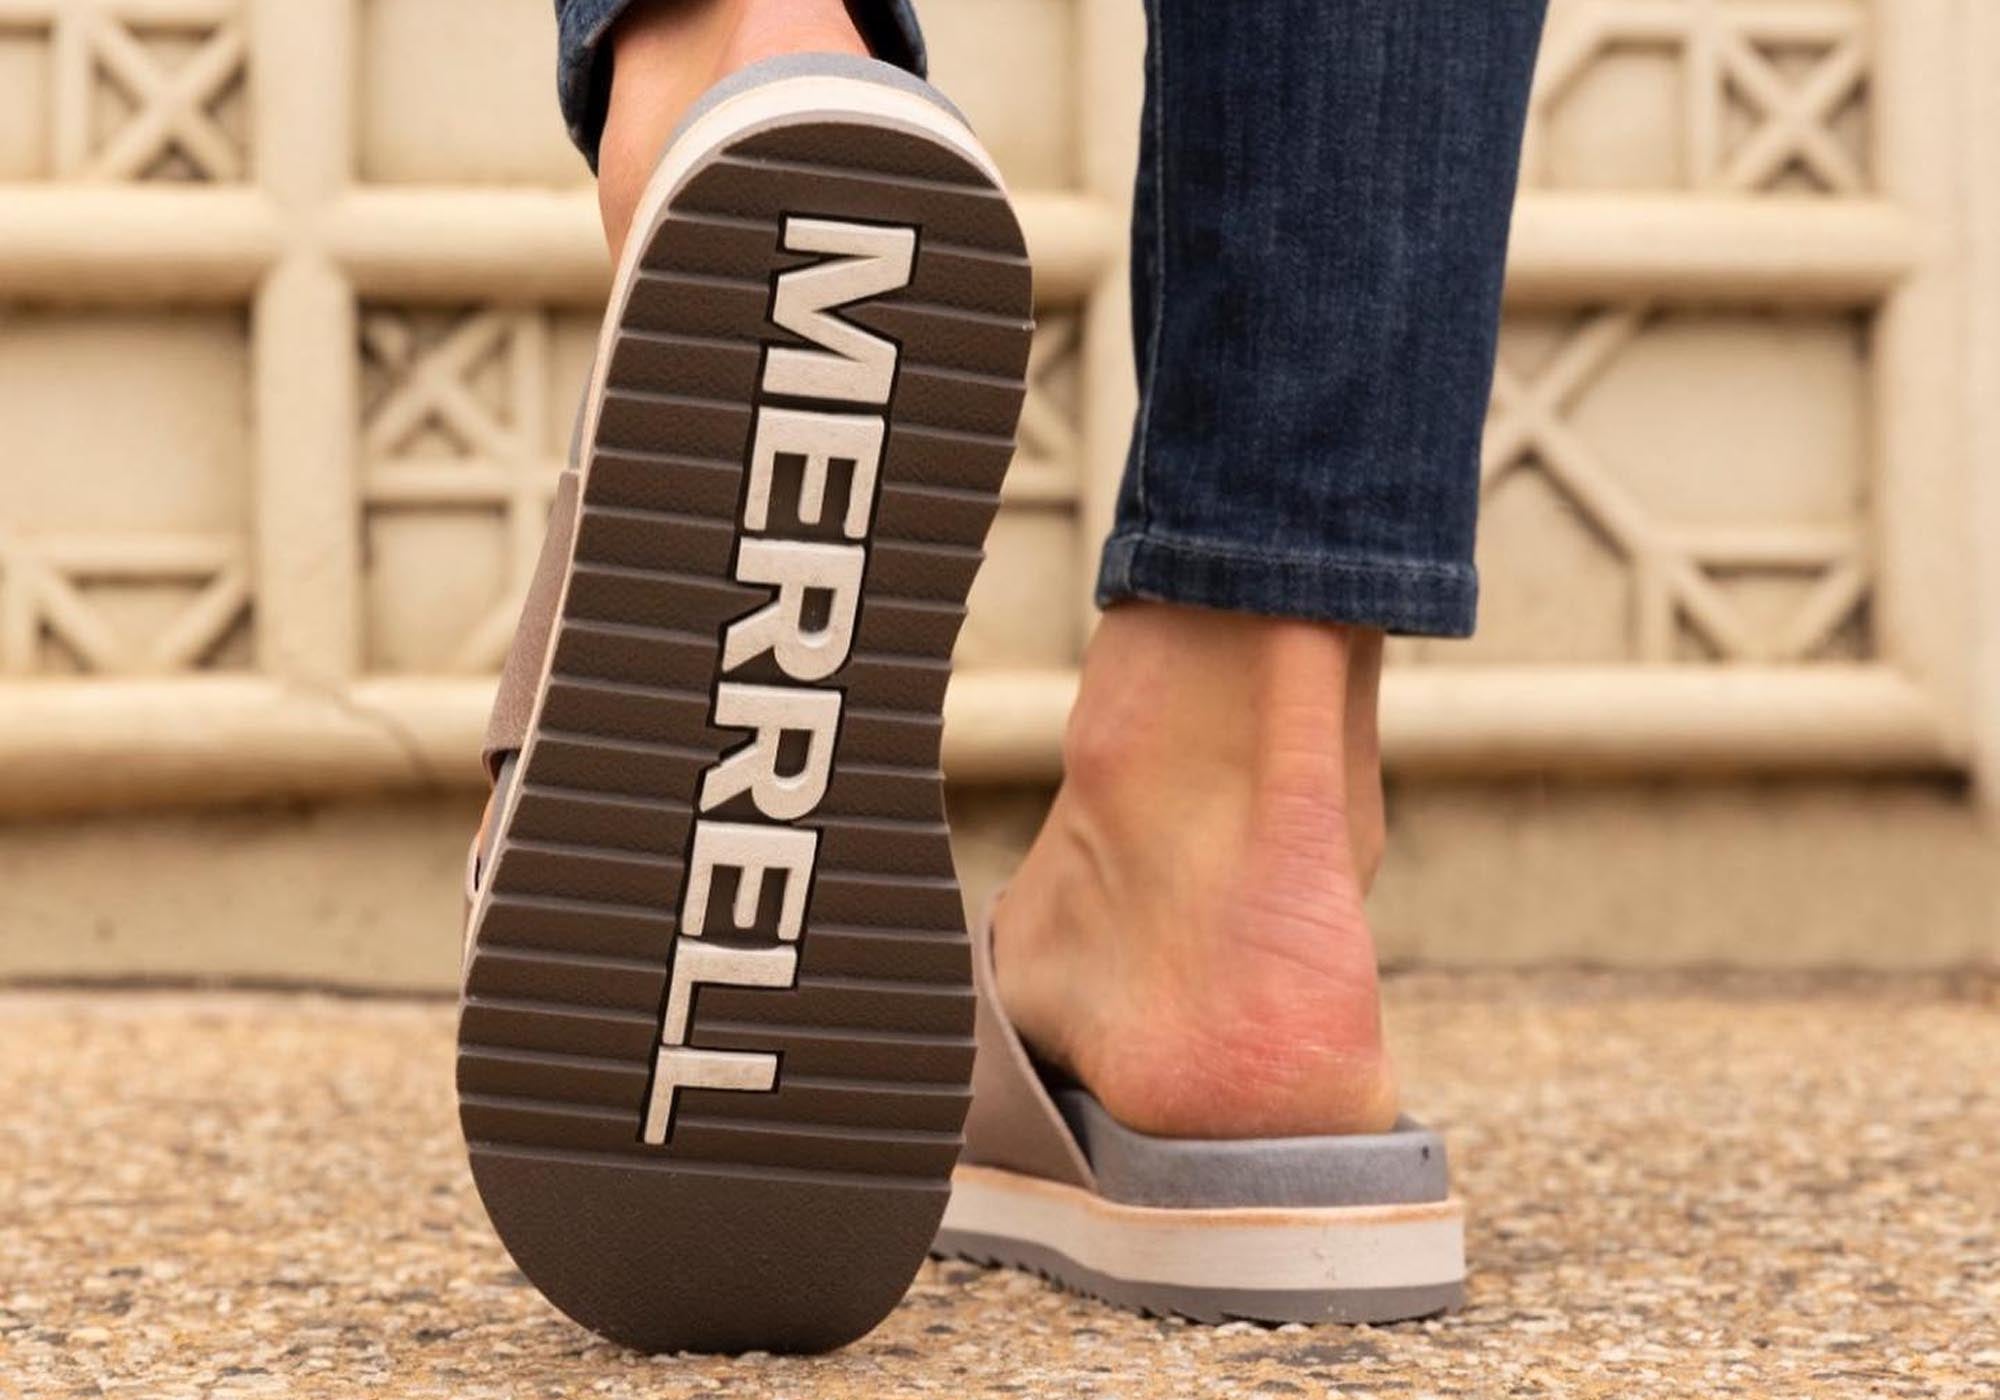 Merrell Womens Juno Slide Comfortable Leather Slides Sandals